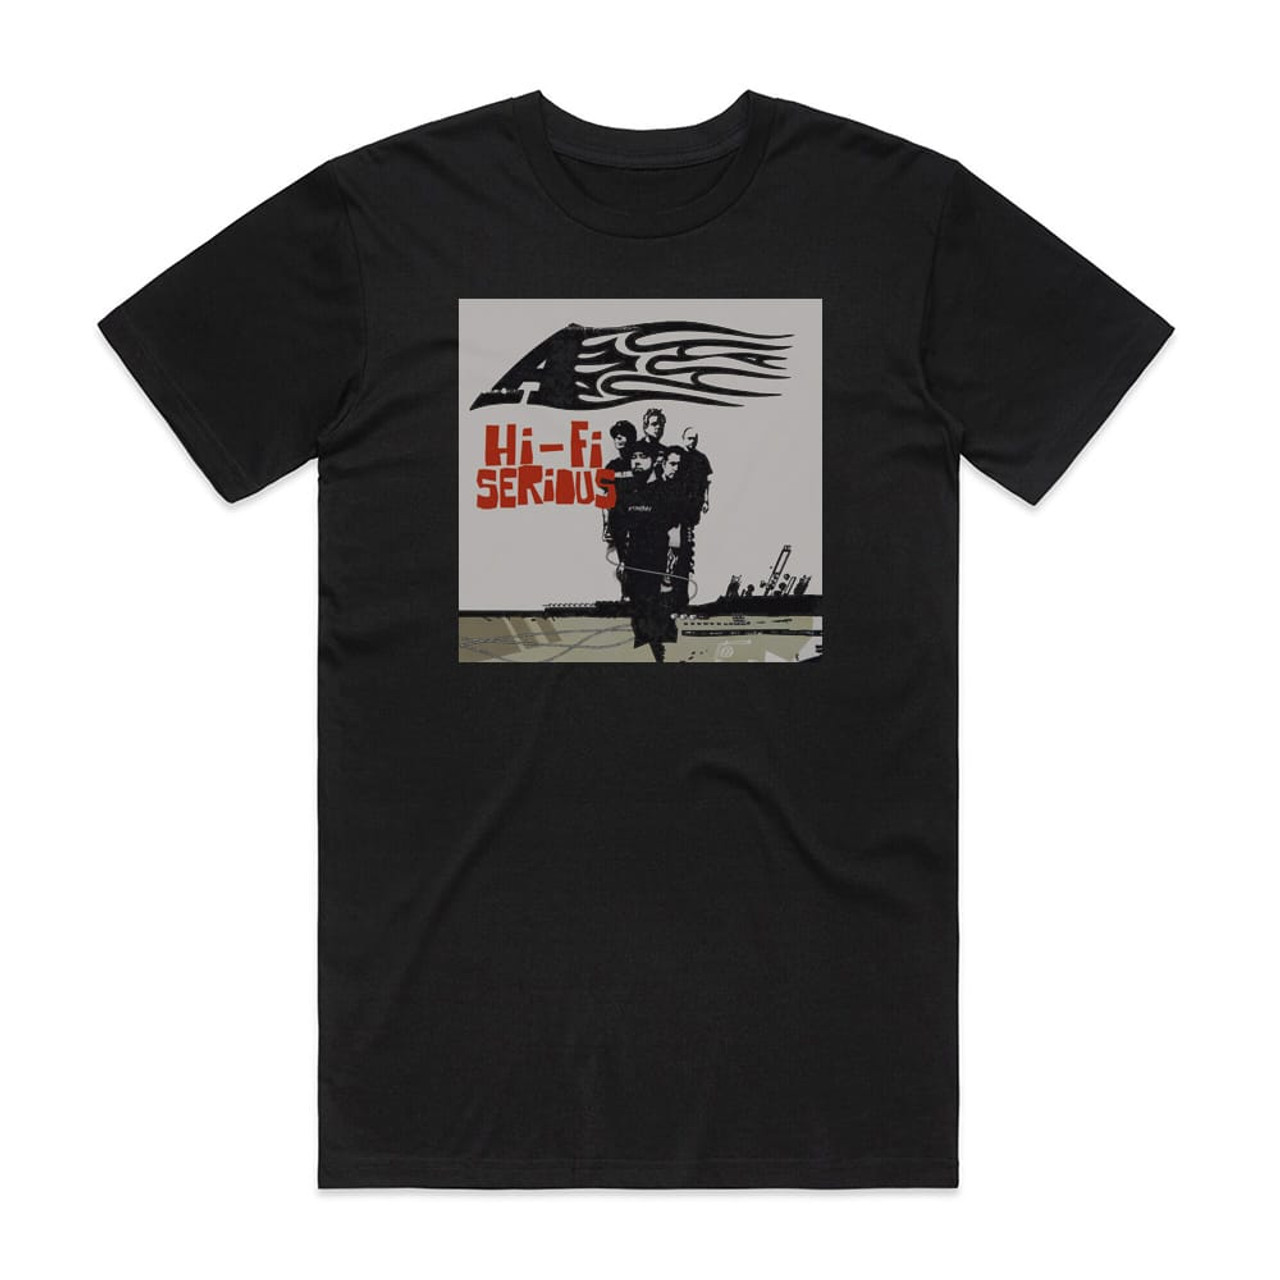 A Hi Fi Serious Album Cover T-Shirt Black